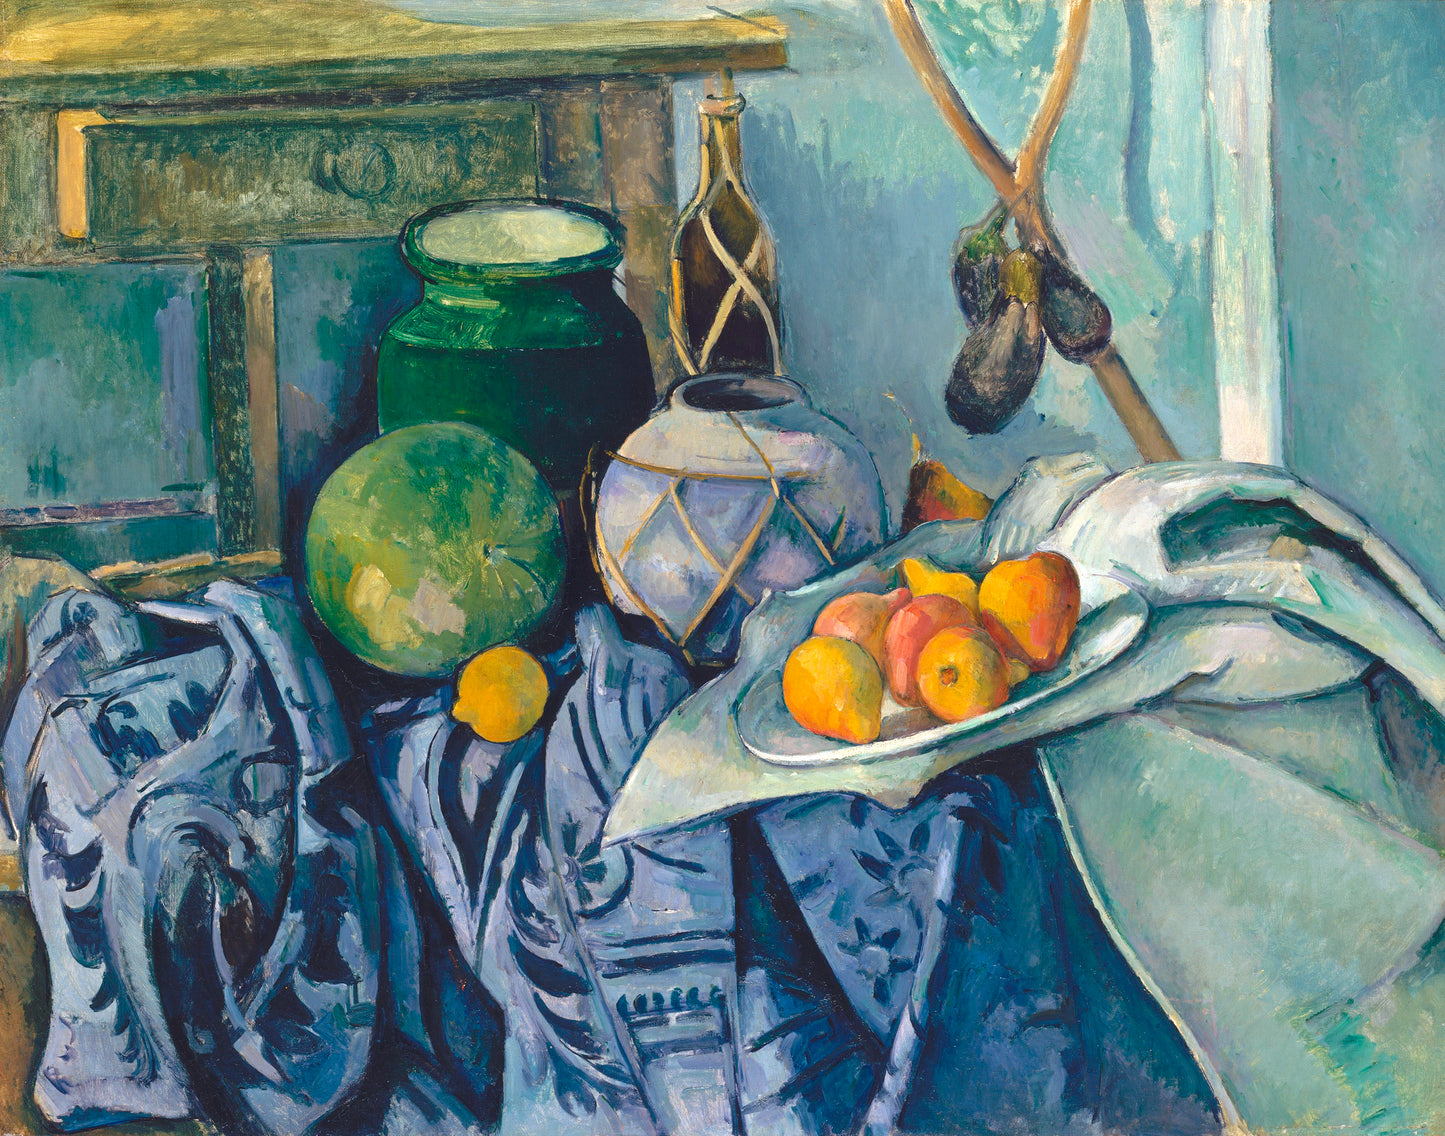 Paul Cezanne - Still Life with Apples 1893 - Digital Art - JPG File Download